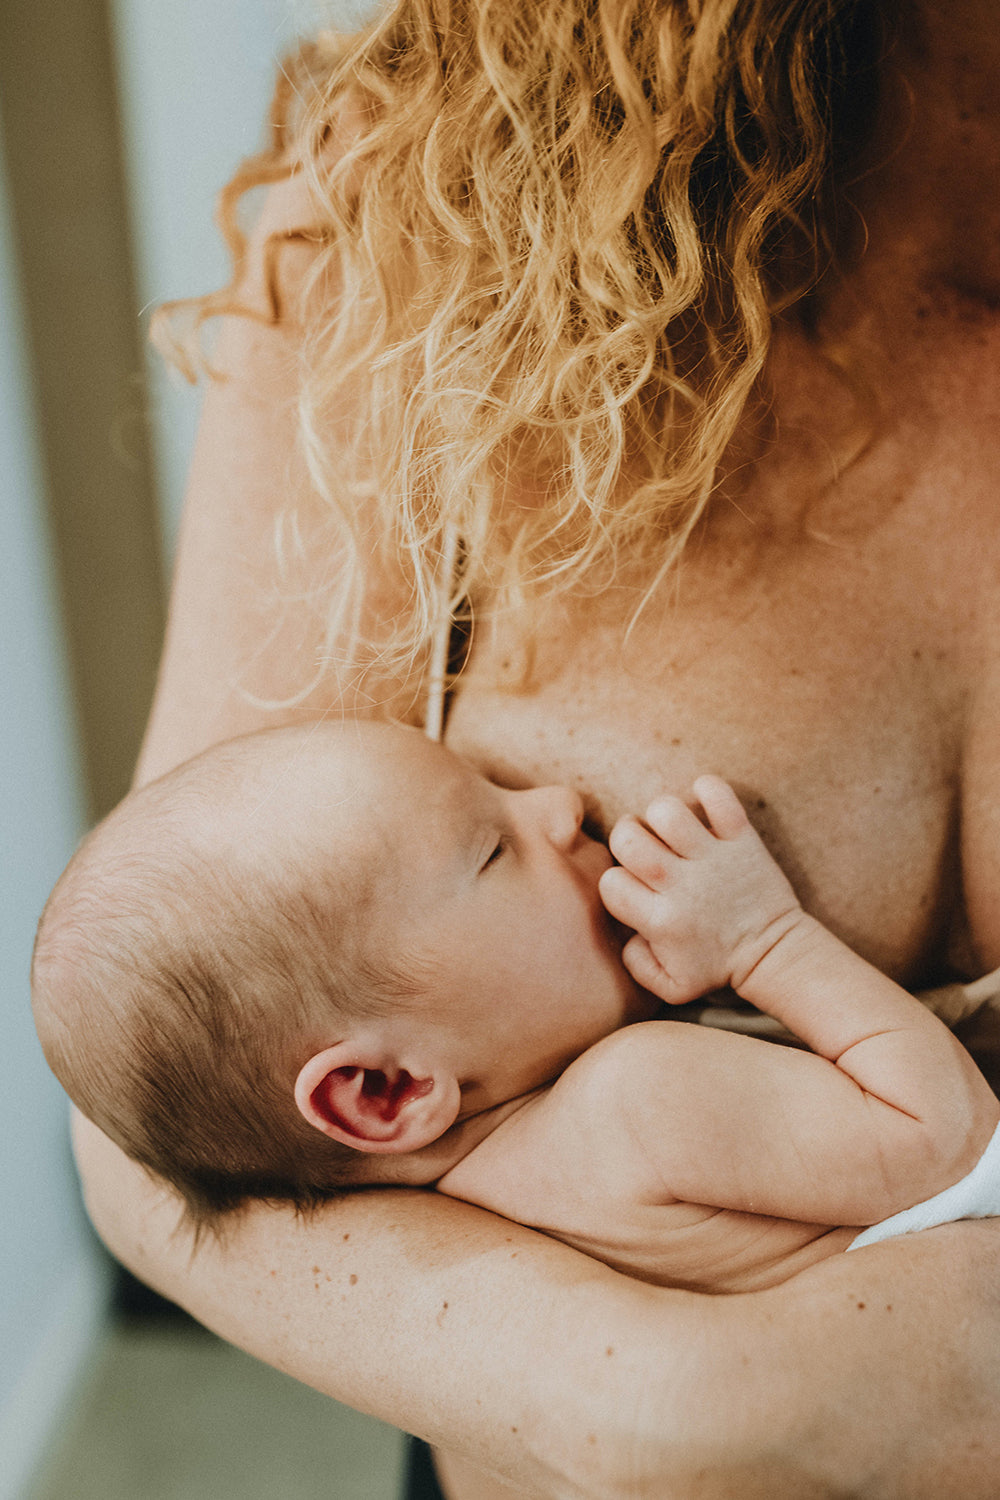 Midwife Marley - Breastfeeding causes saggy boobs Heard this one